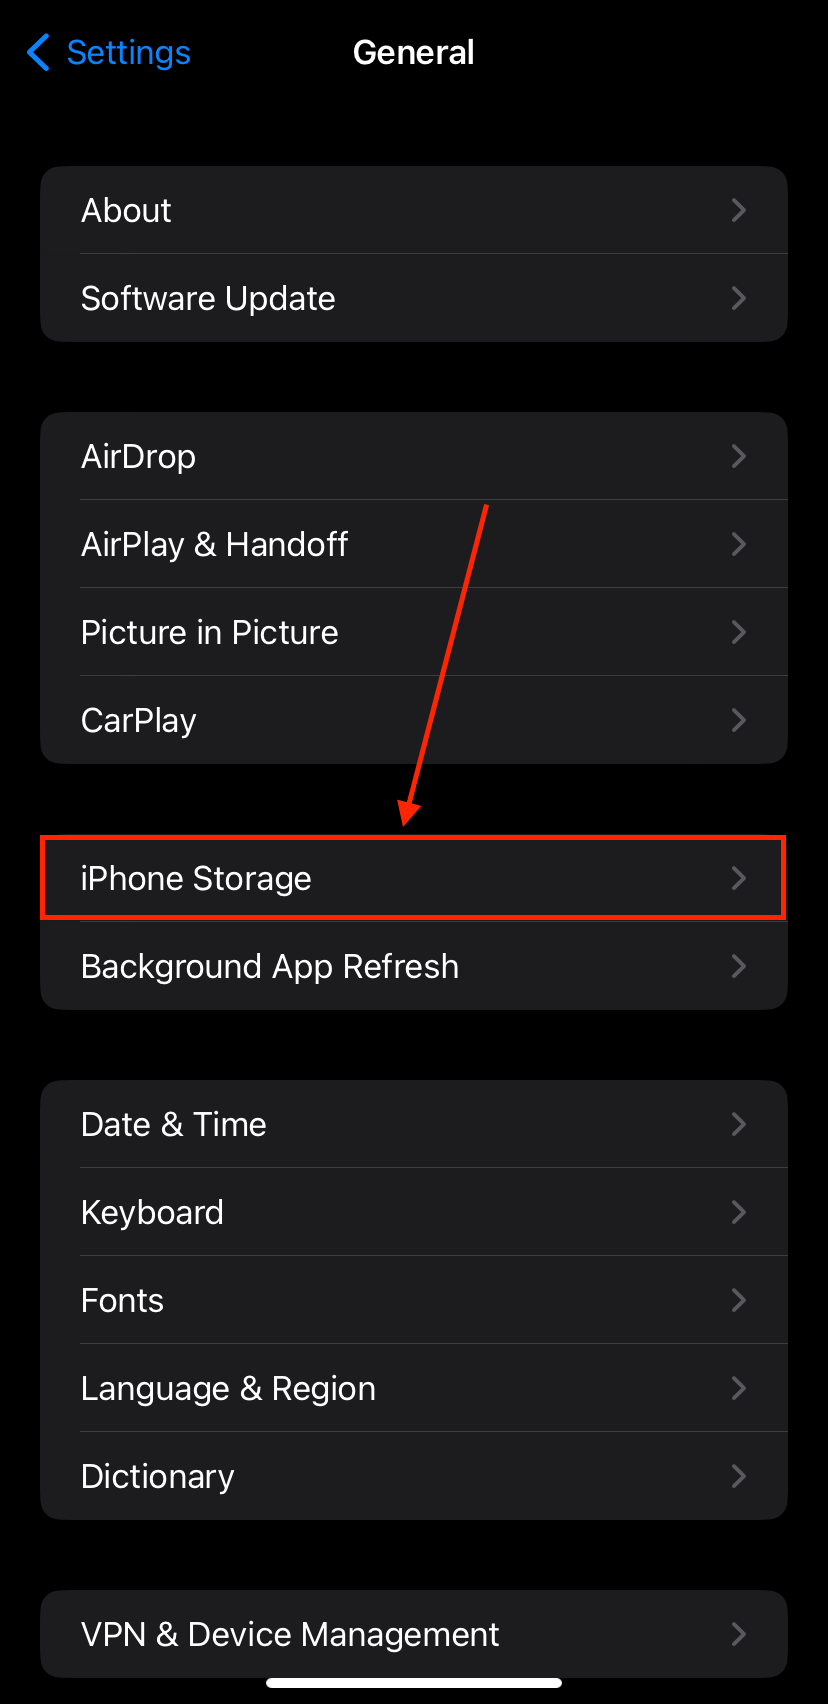 iPhone Storage option in the General menu of the Settings app